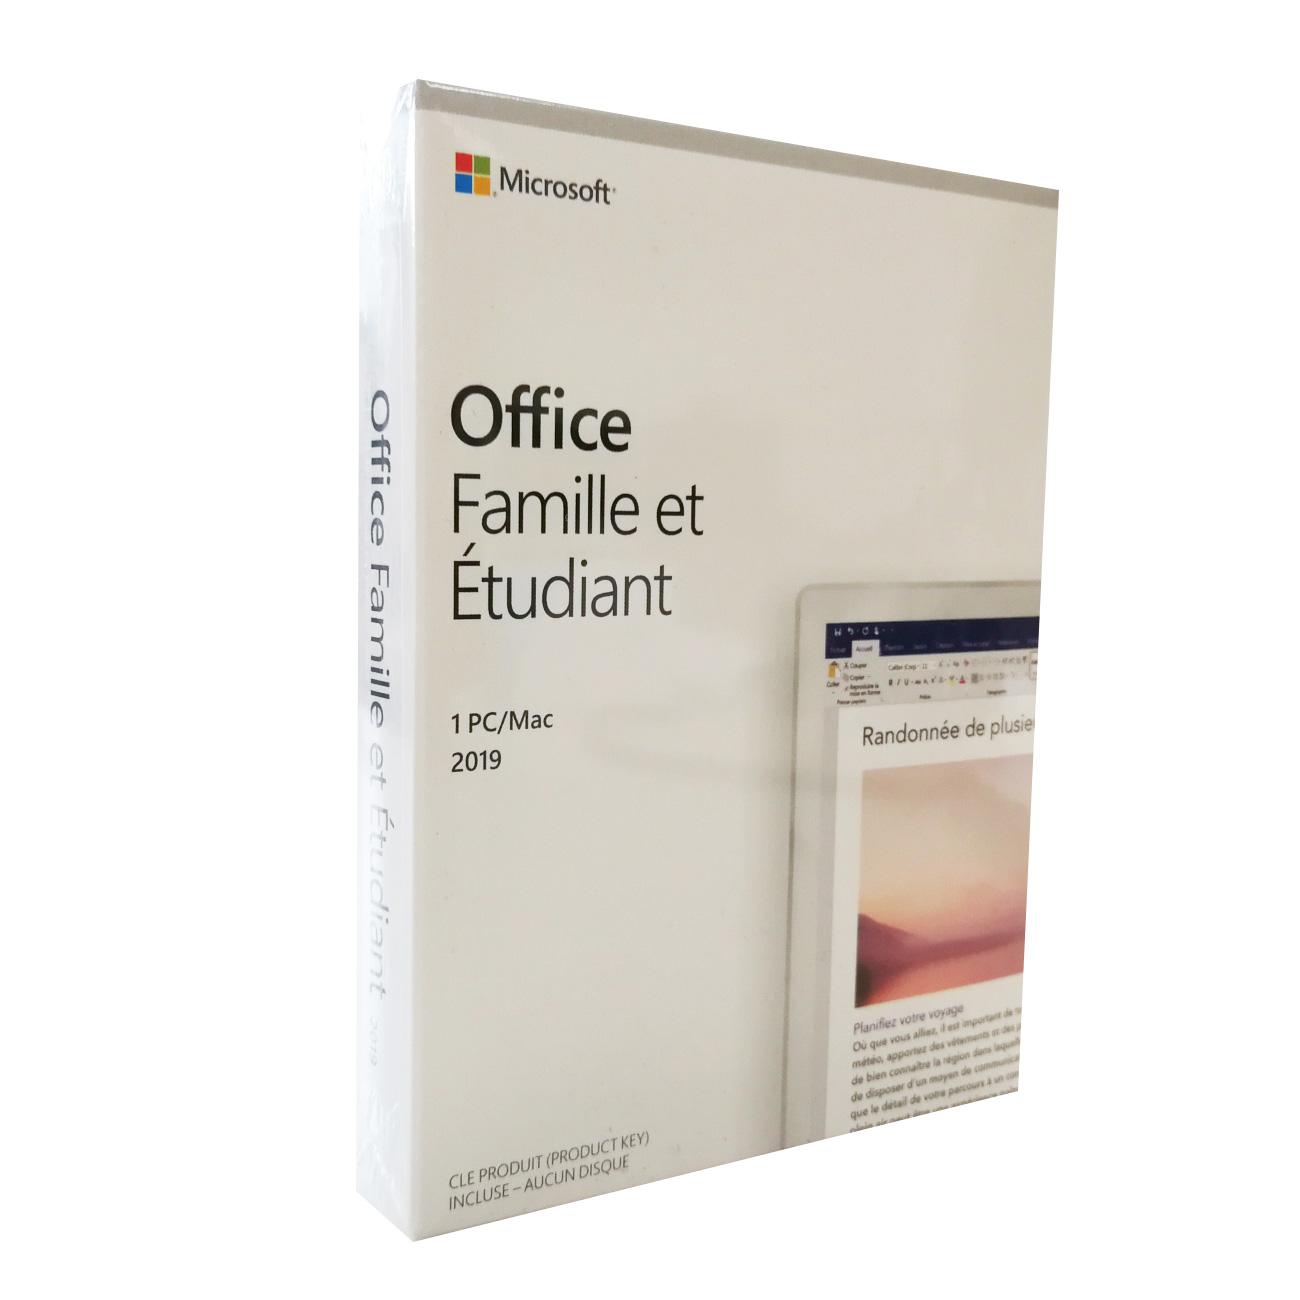 Microsoft office 2019 miclg031039 hd